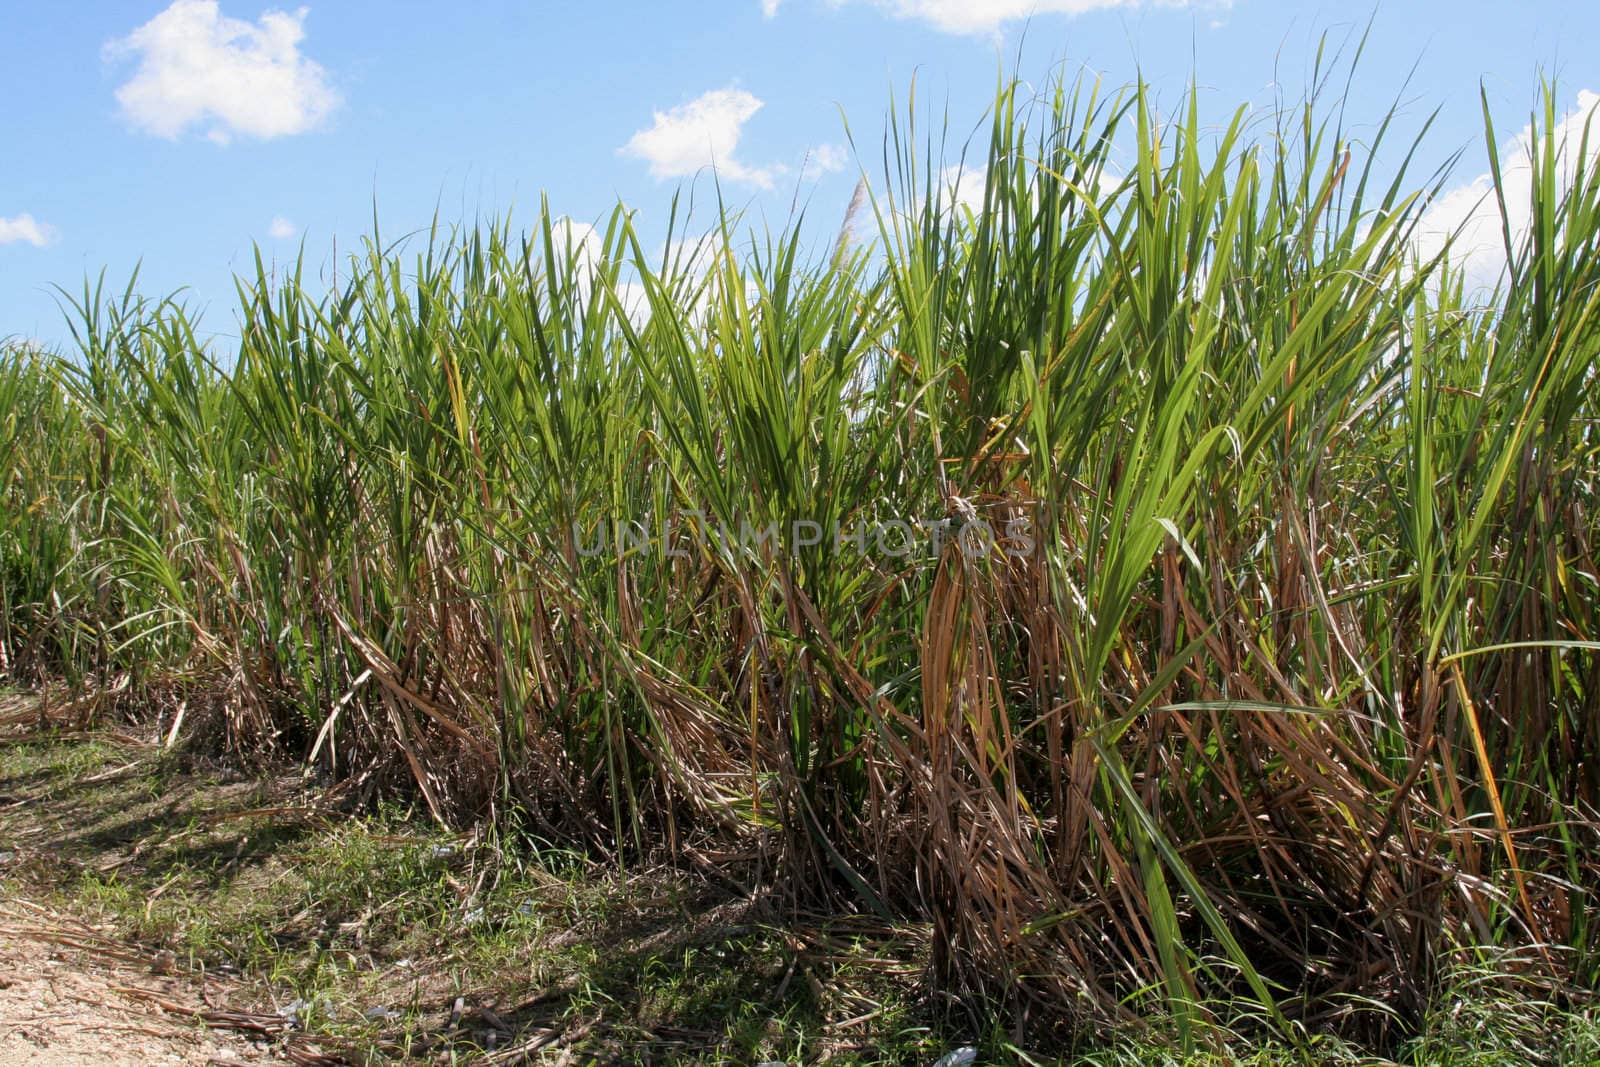 Sugar cane fields in the Dominican Republic.
